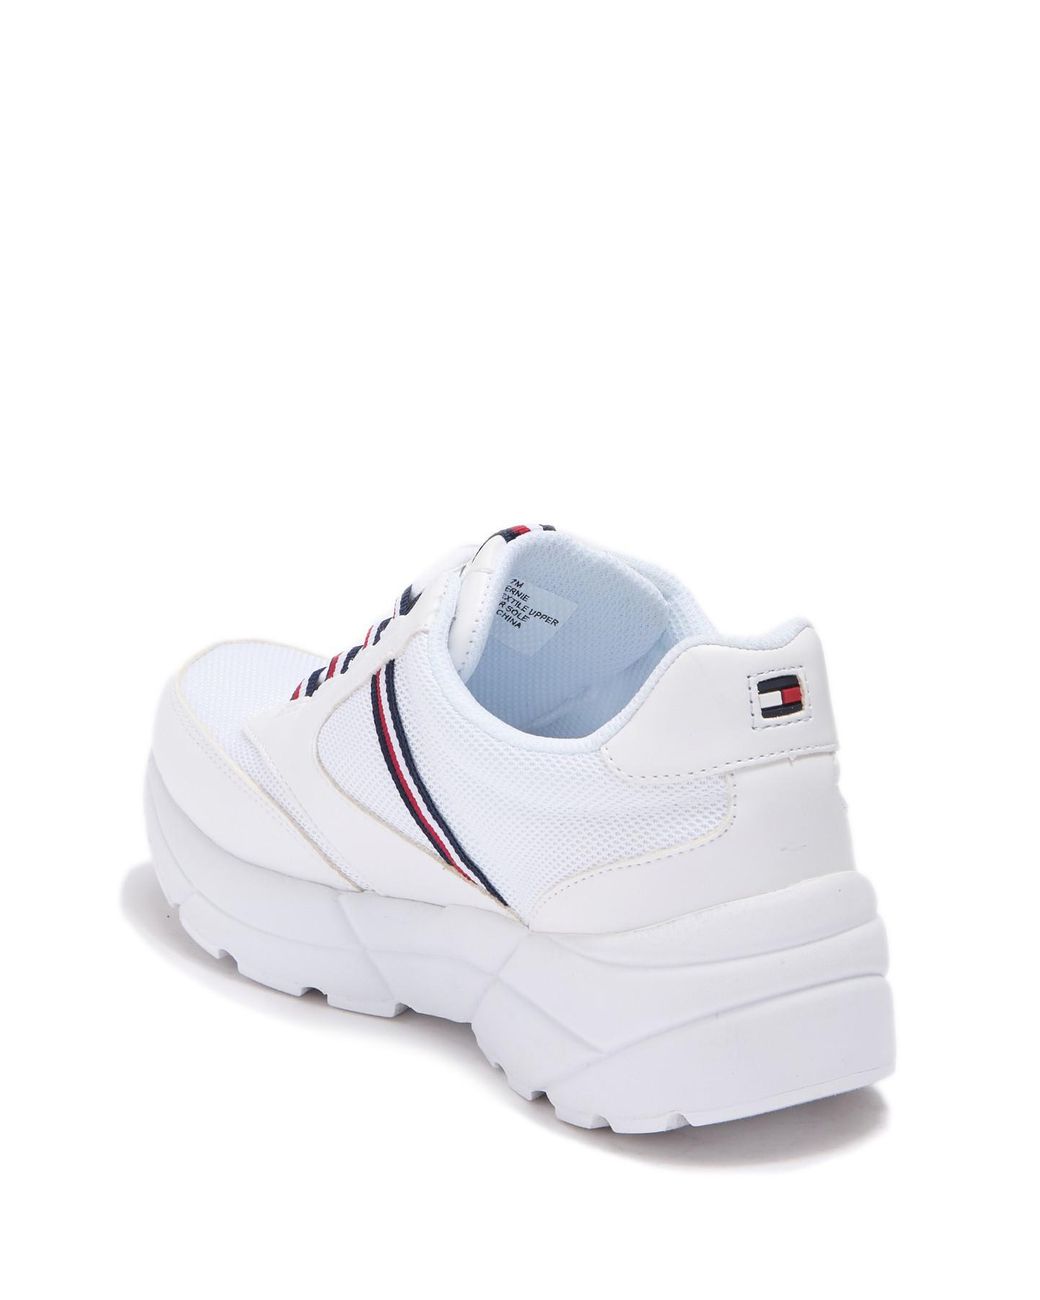 Tommy Hilfiger Ernie Sneaker in White | Lyst